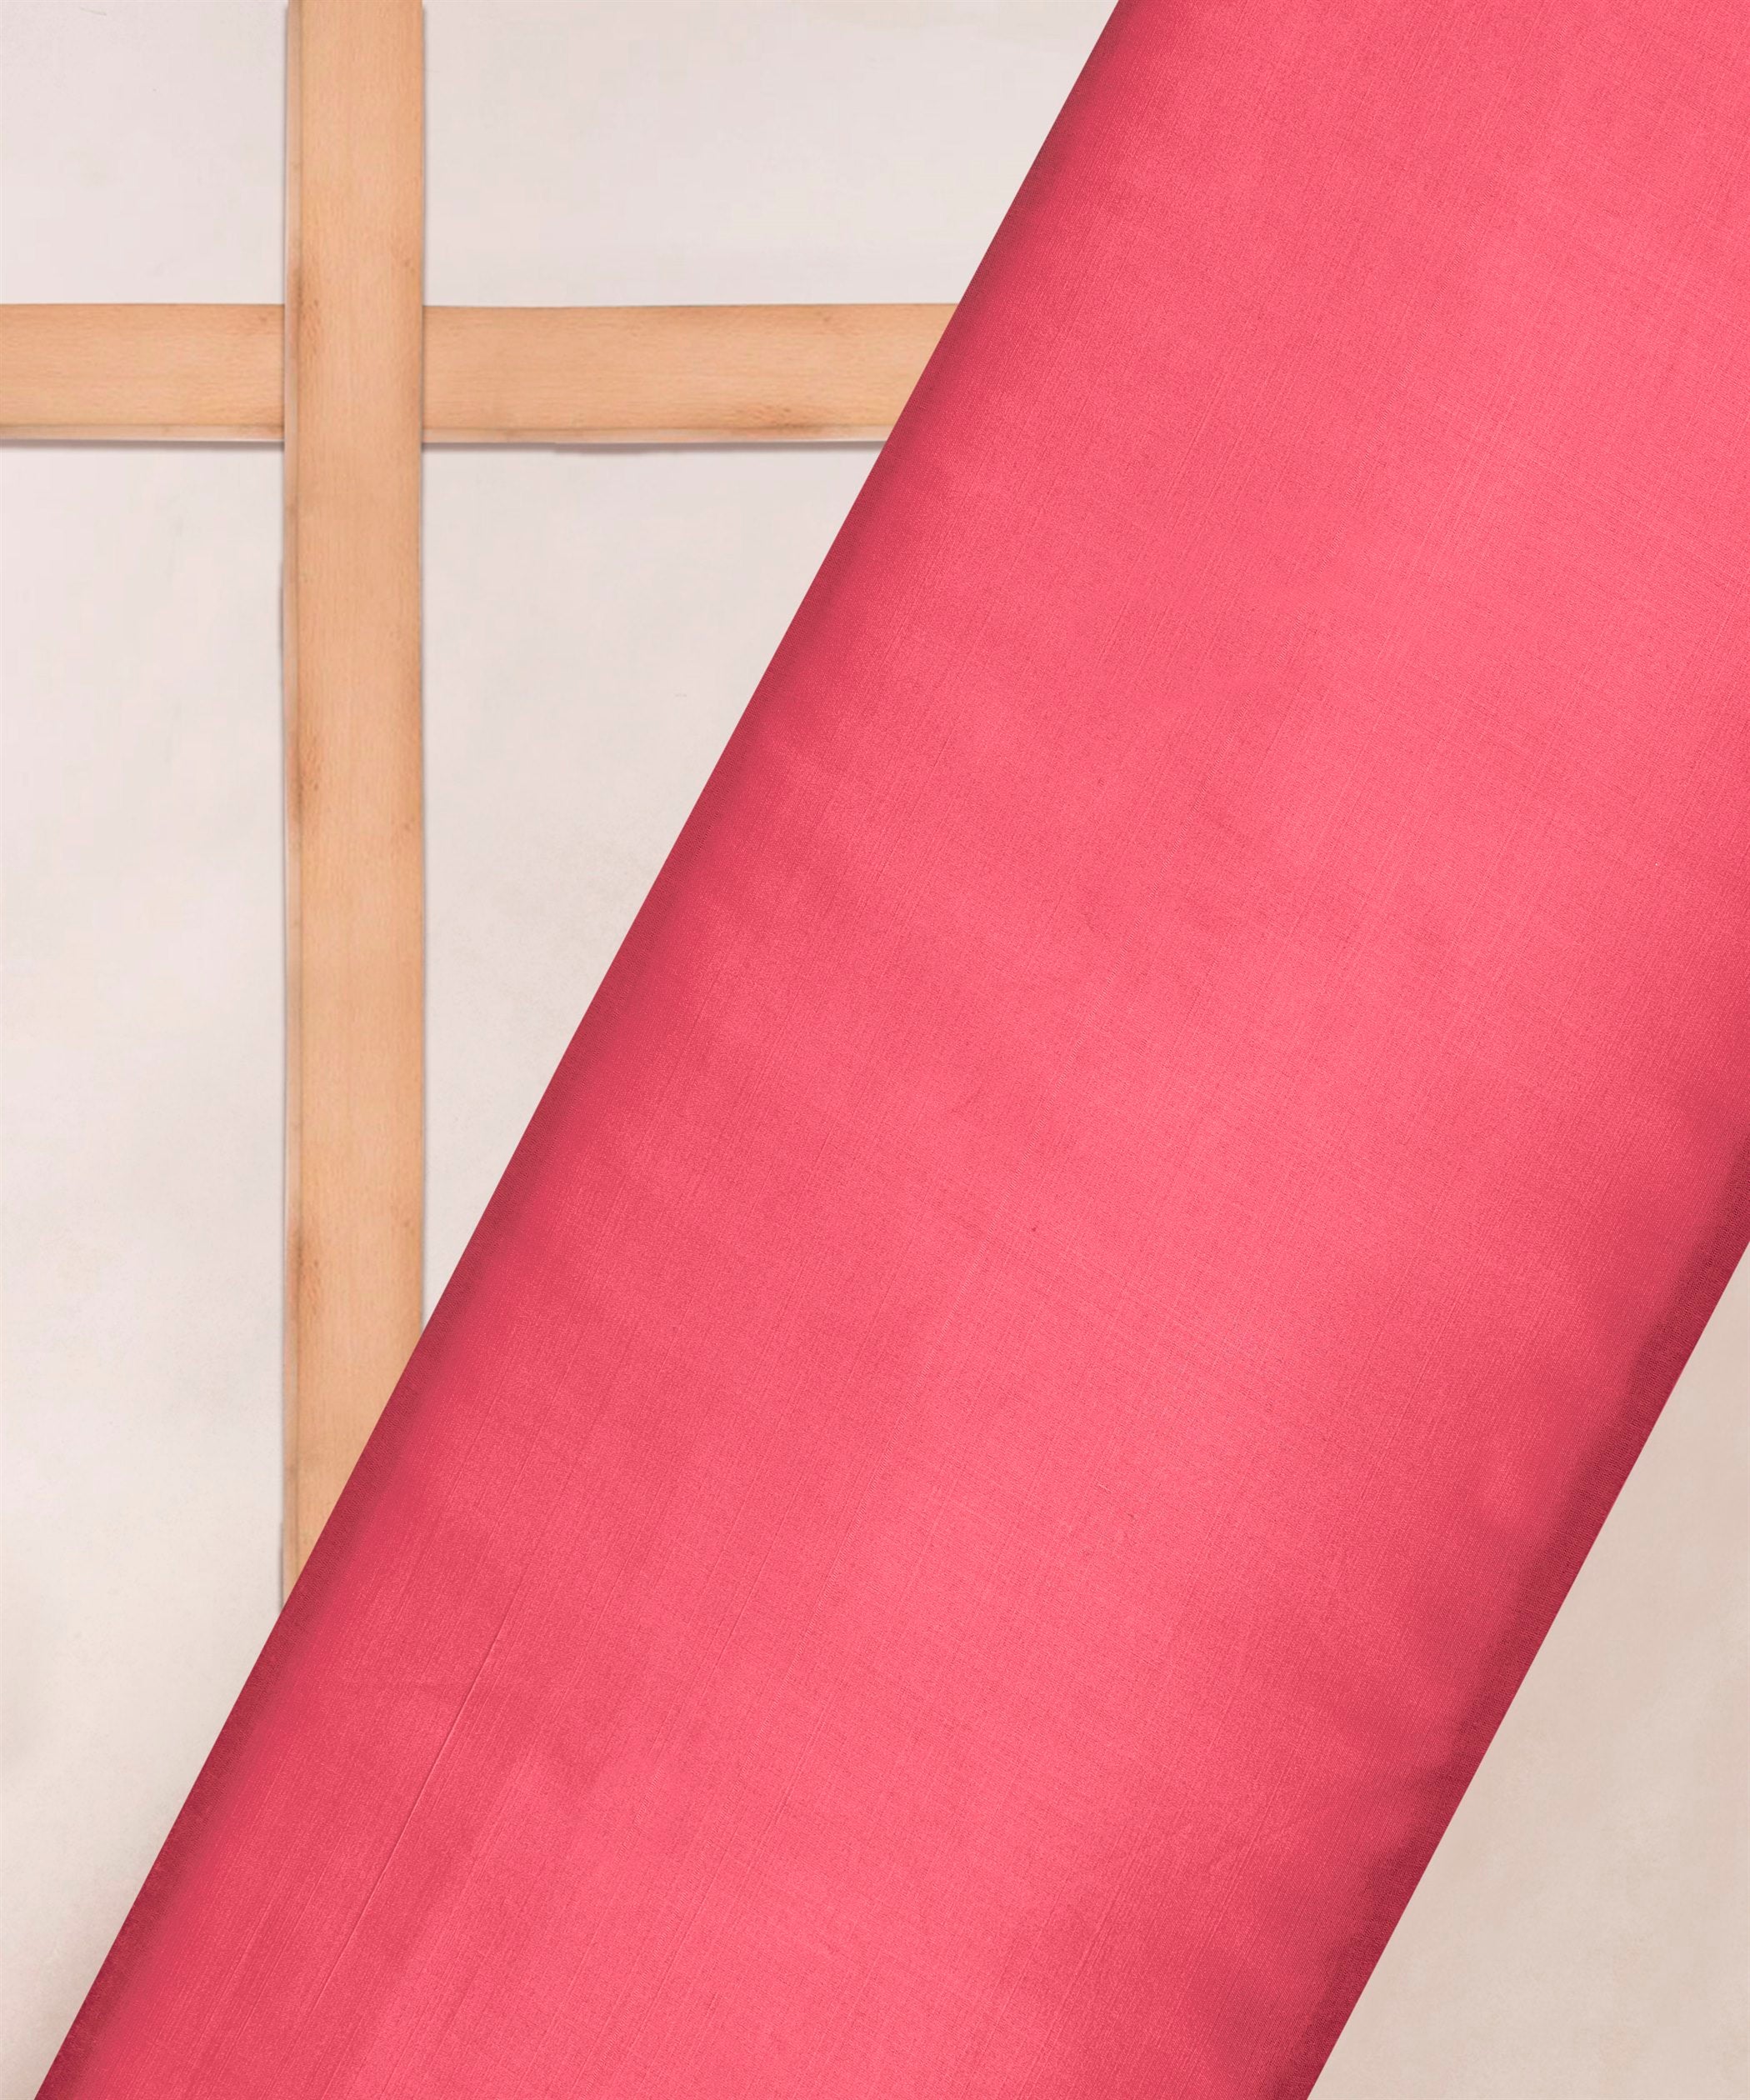 Rouge Pink Plain Dyed Modal Satin Fabric